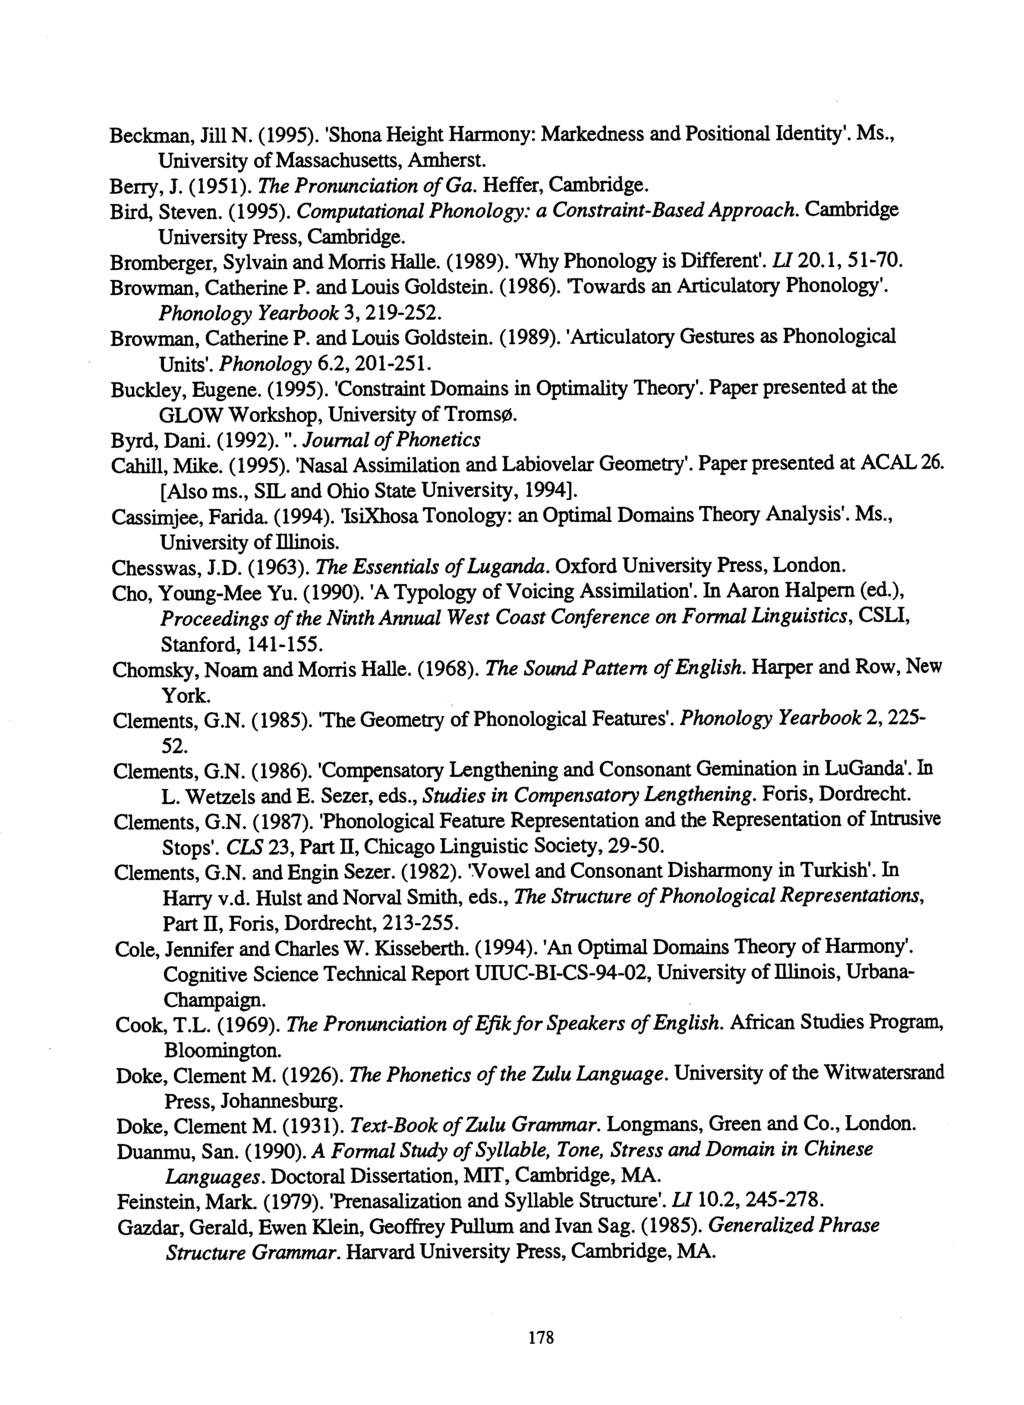 Beckman, Jill N. (1995). 'Shona Height Harmony: Markedness and Positional Identity'. Ms., University of Massachusetts, Amherst. Berry, J. (1951). The Pronunciation of Ga. Heifer, Cambridge.